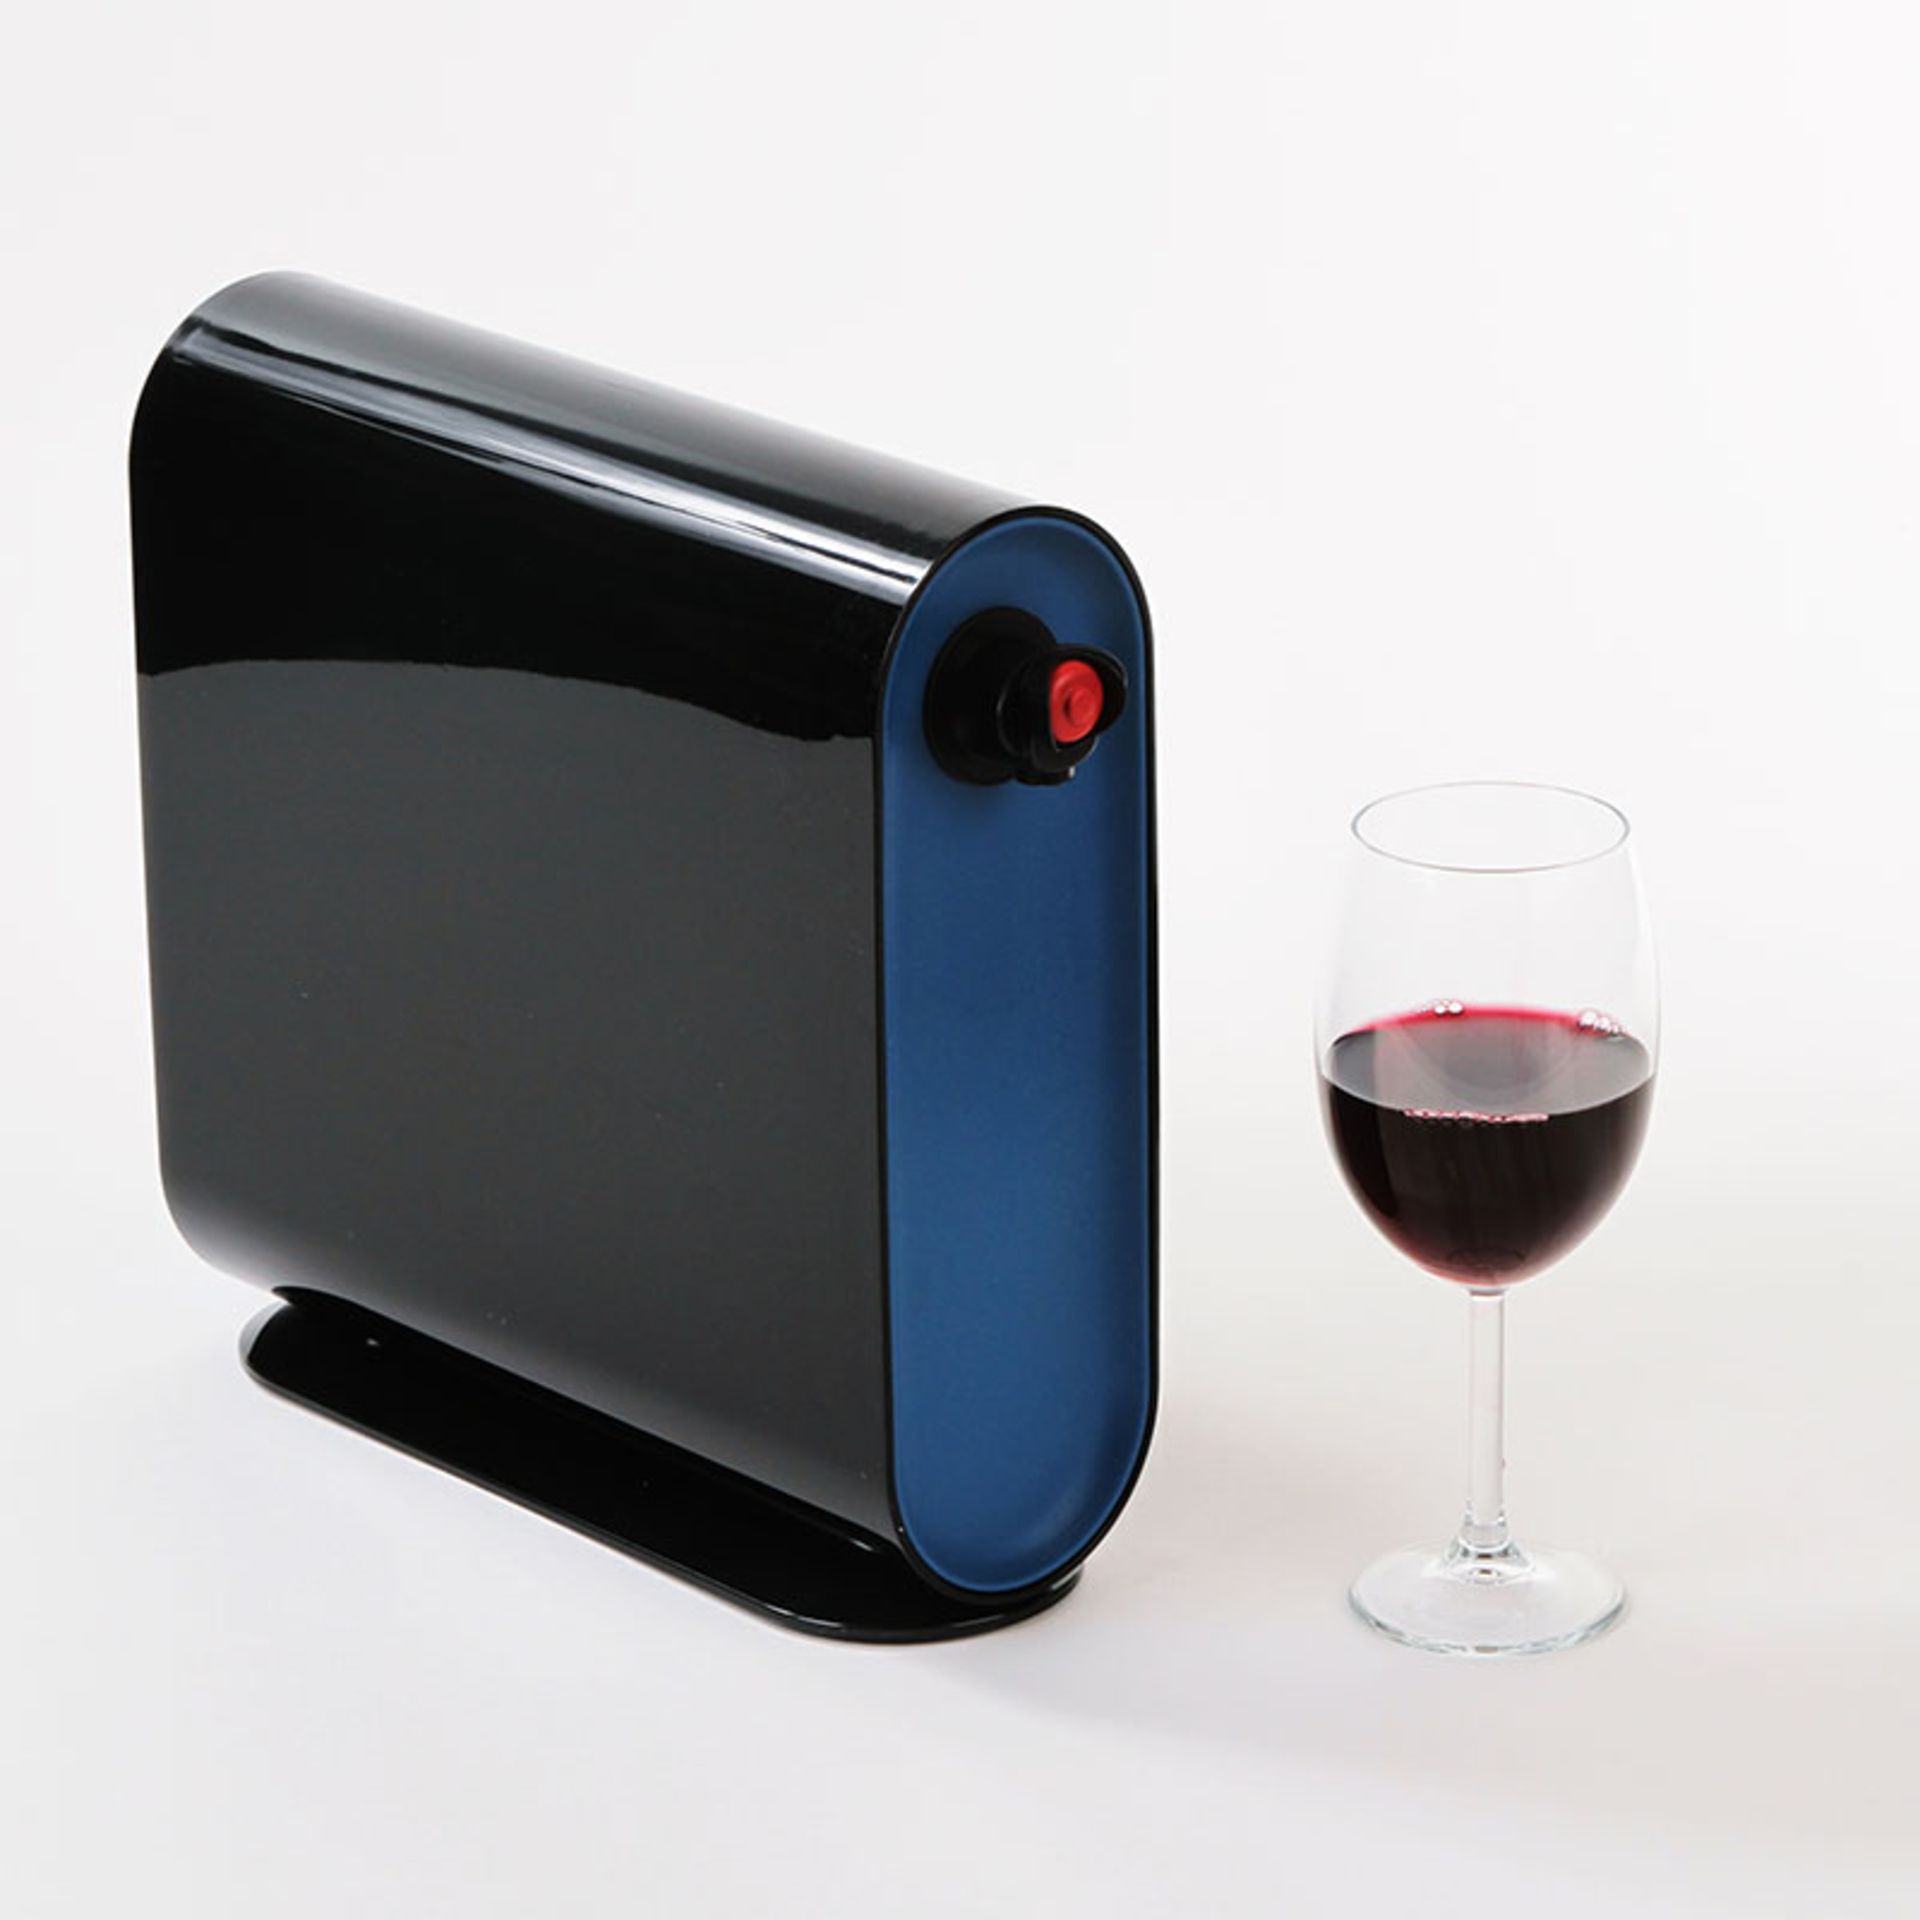 V Brand New Wine Plus Gravity Defying Wine Server RRP £44.99 (Unika Direct) X 2 YOUR BID PRICE TO BE